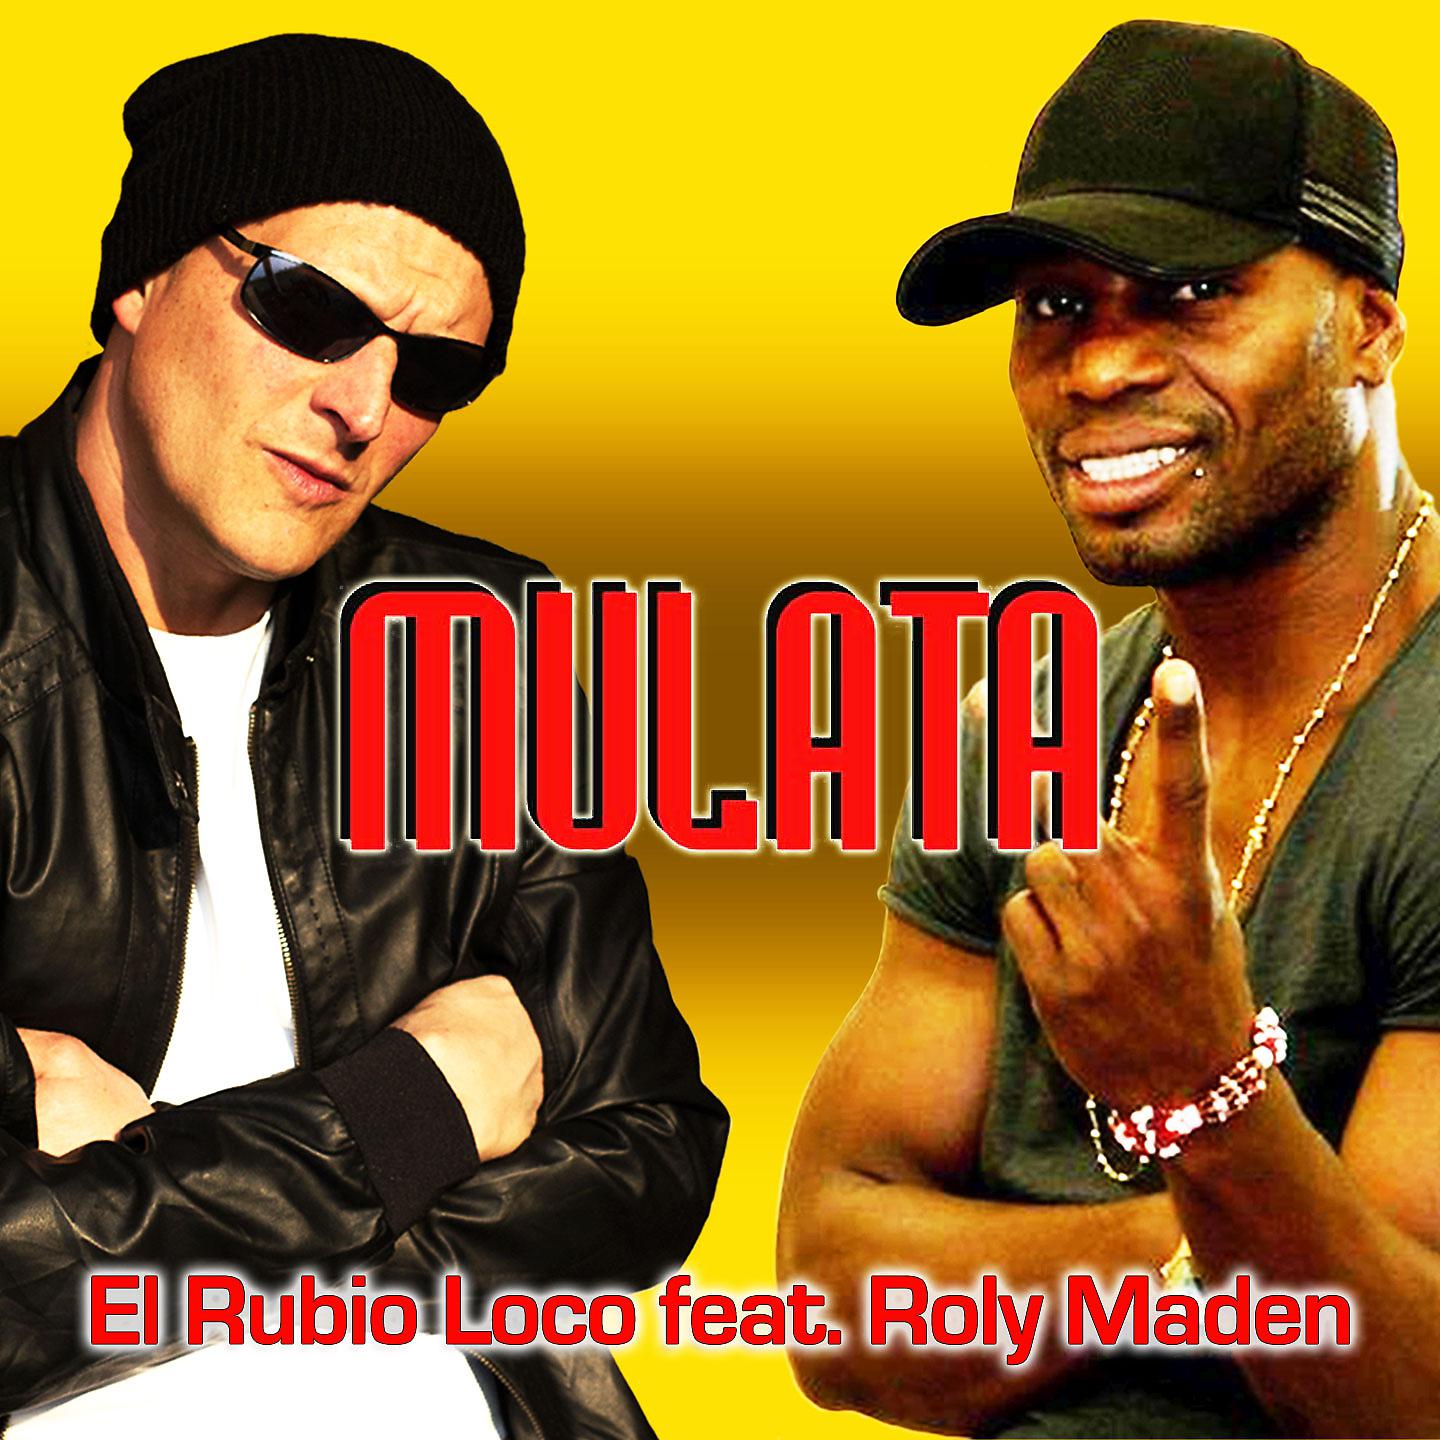 Постер альбома Mulata